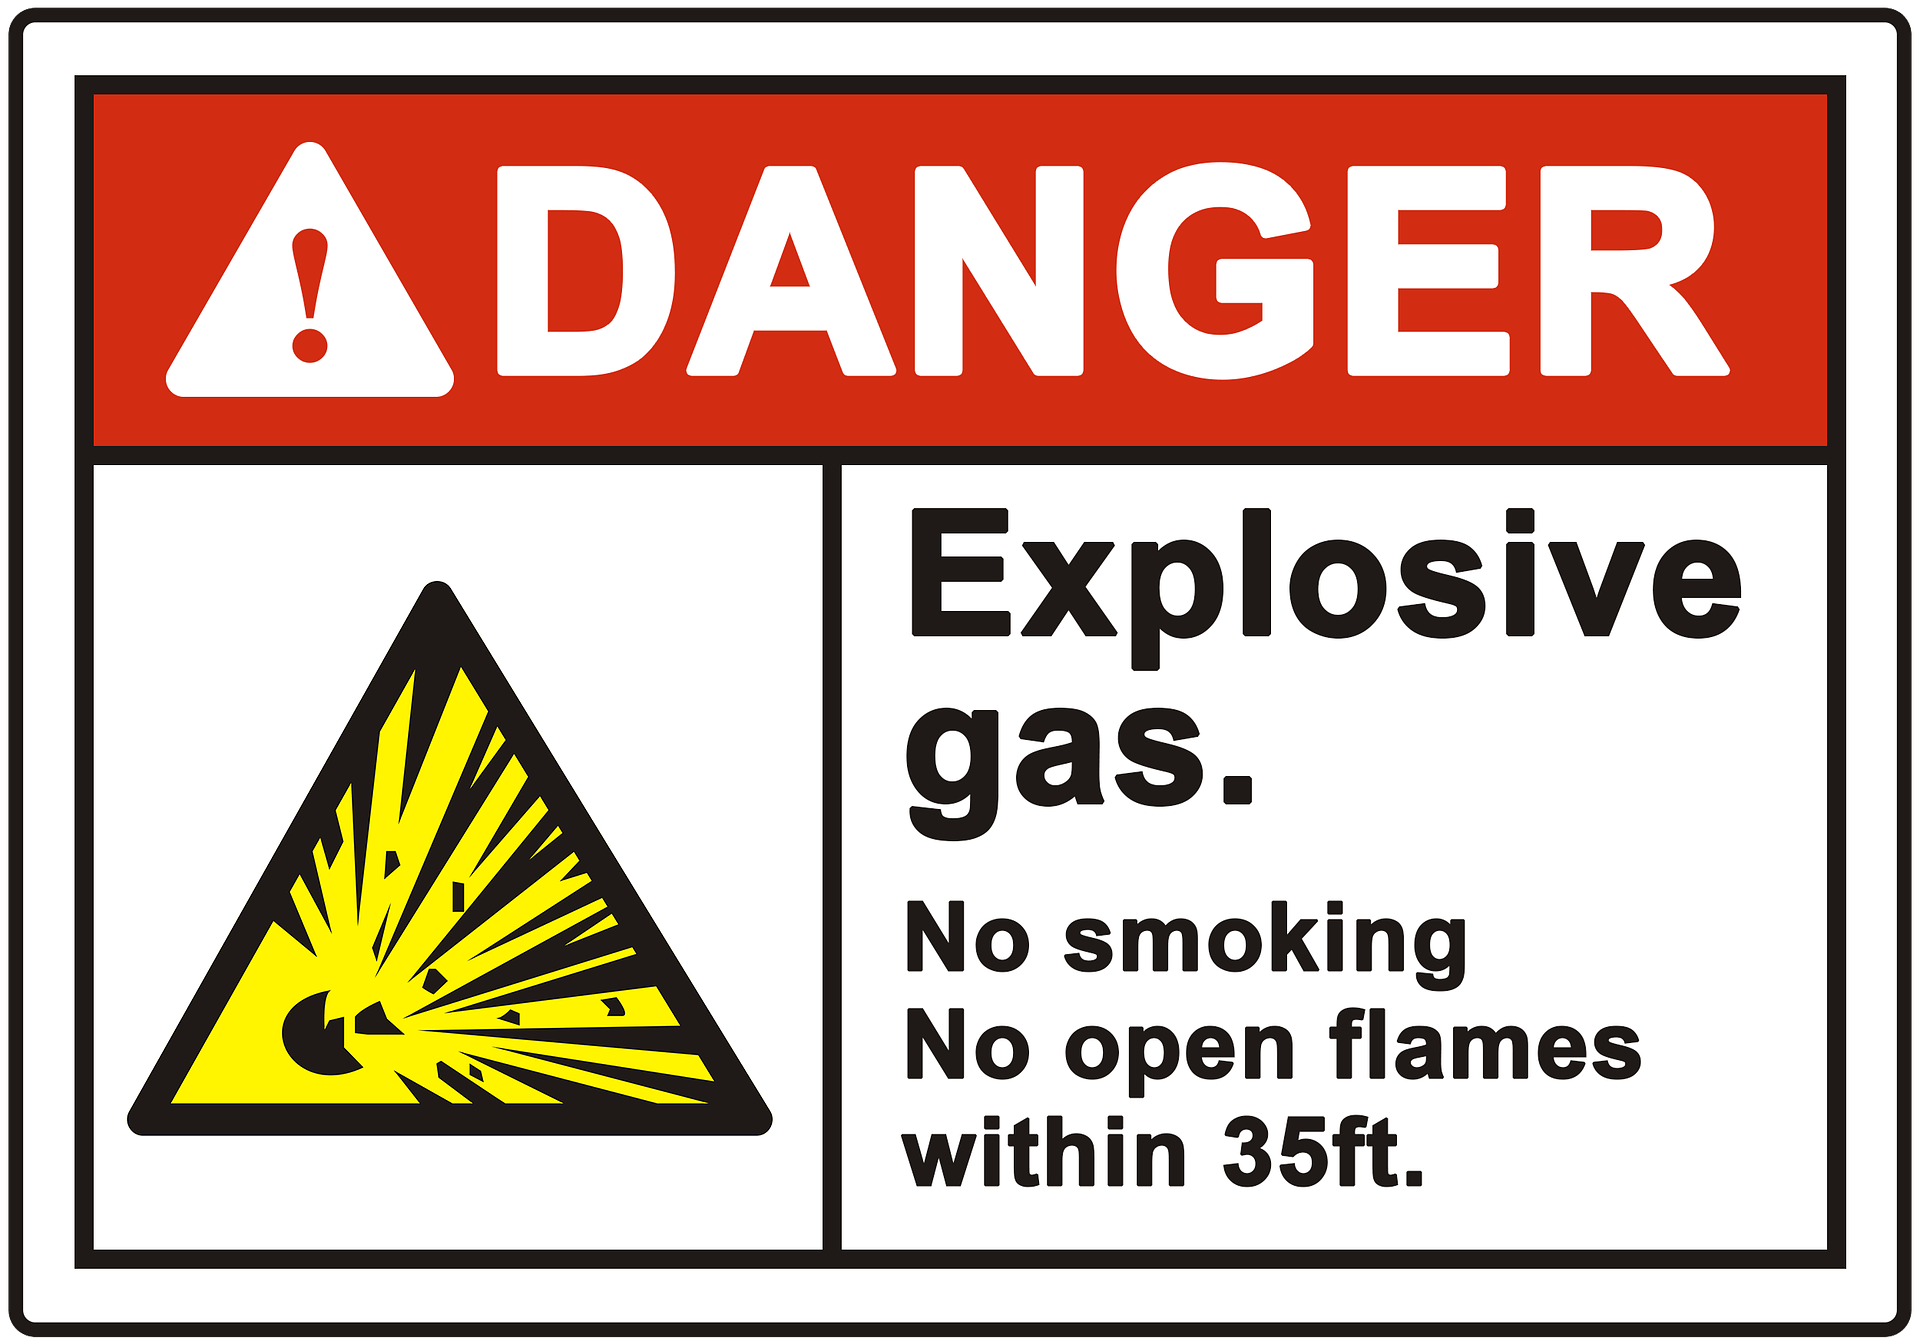 Furnace explosive gas warning label